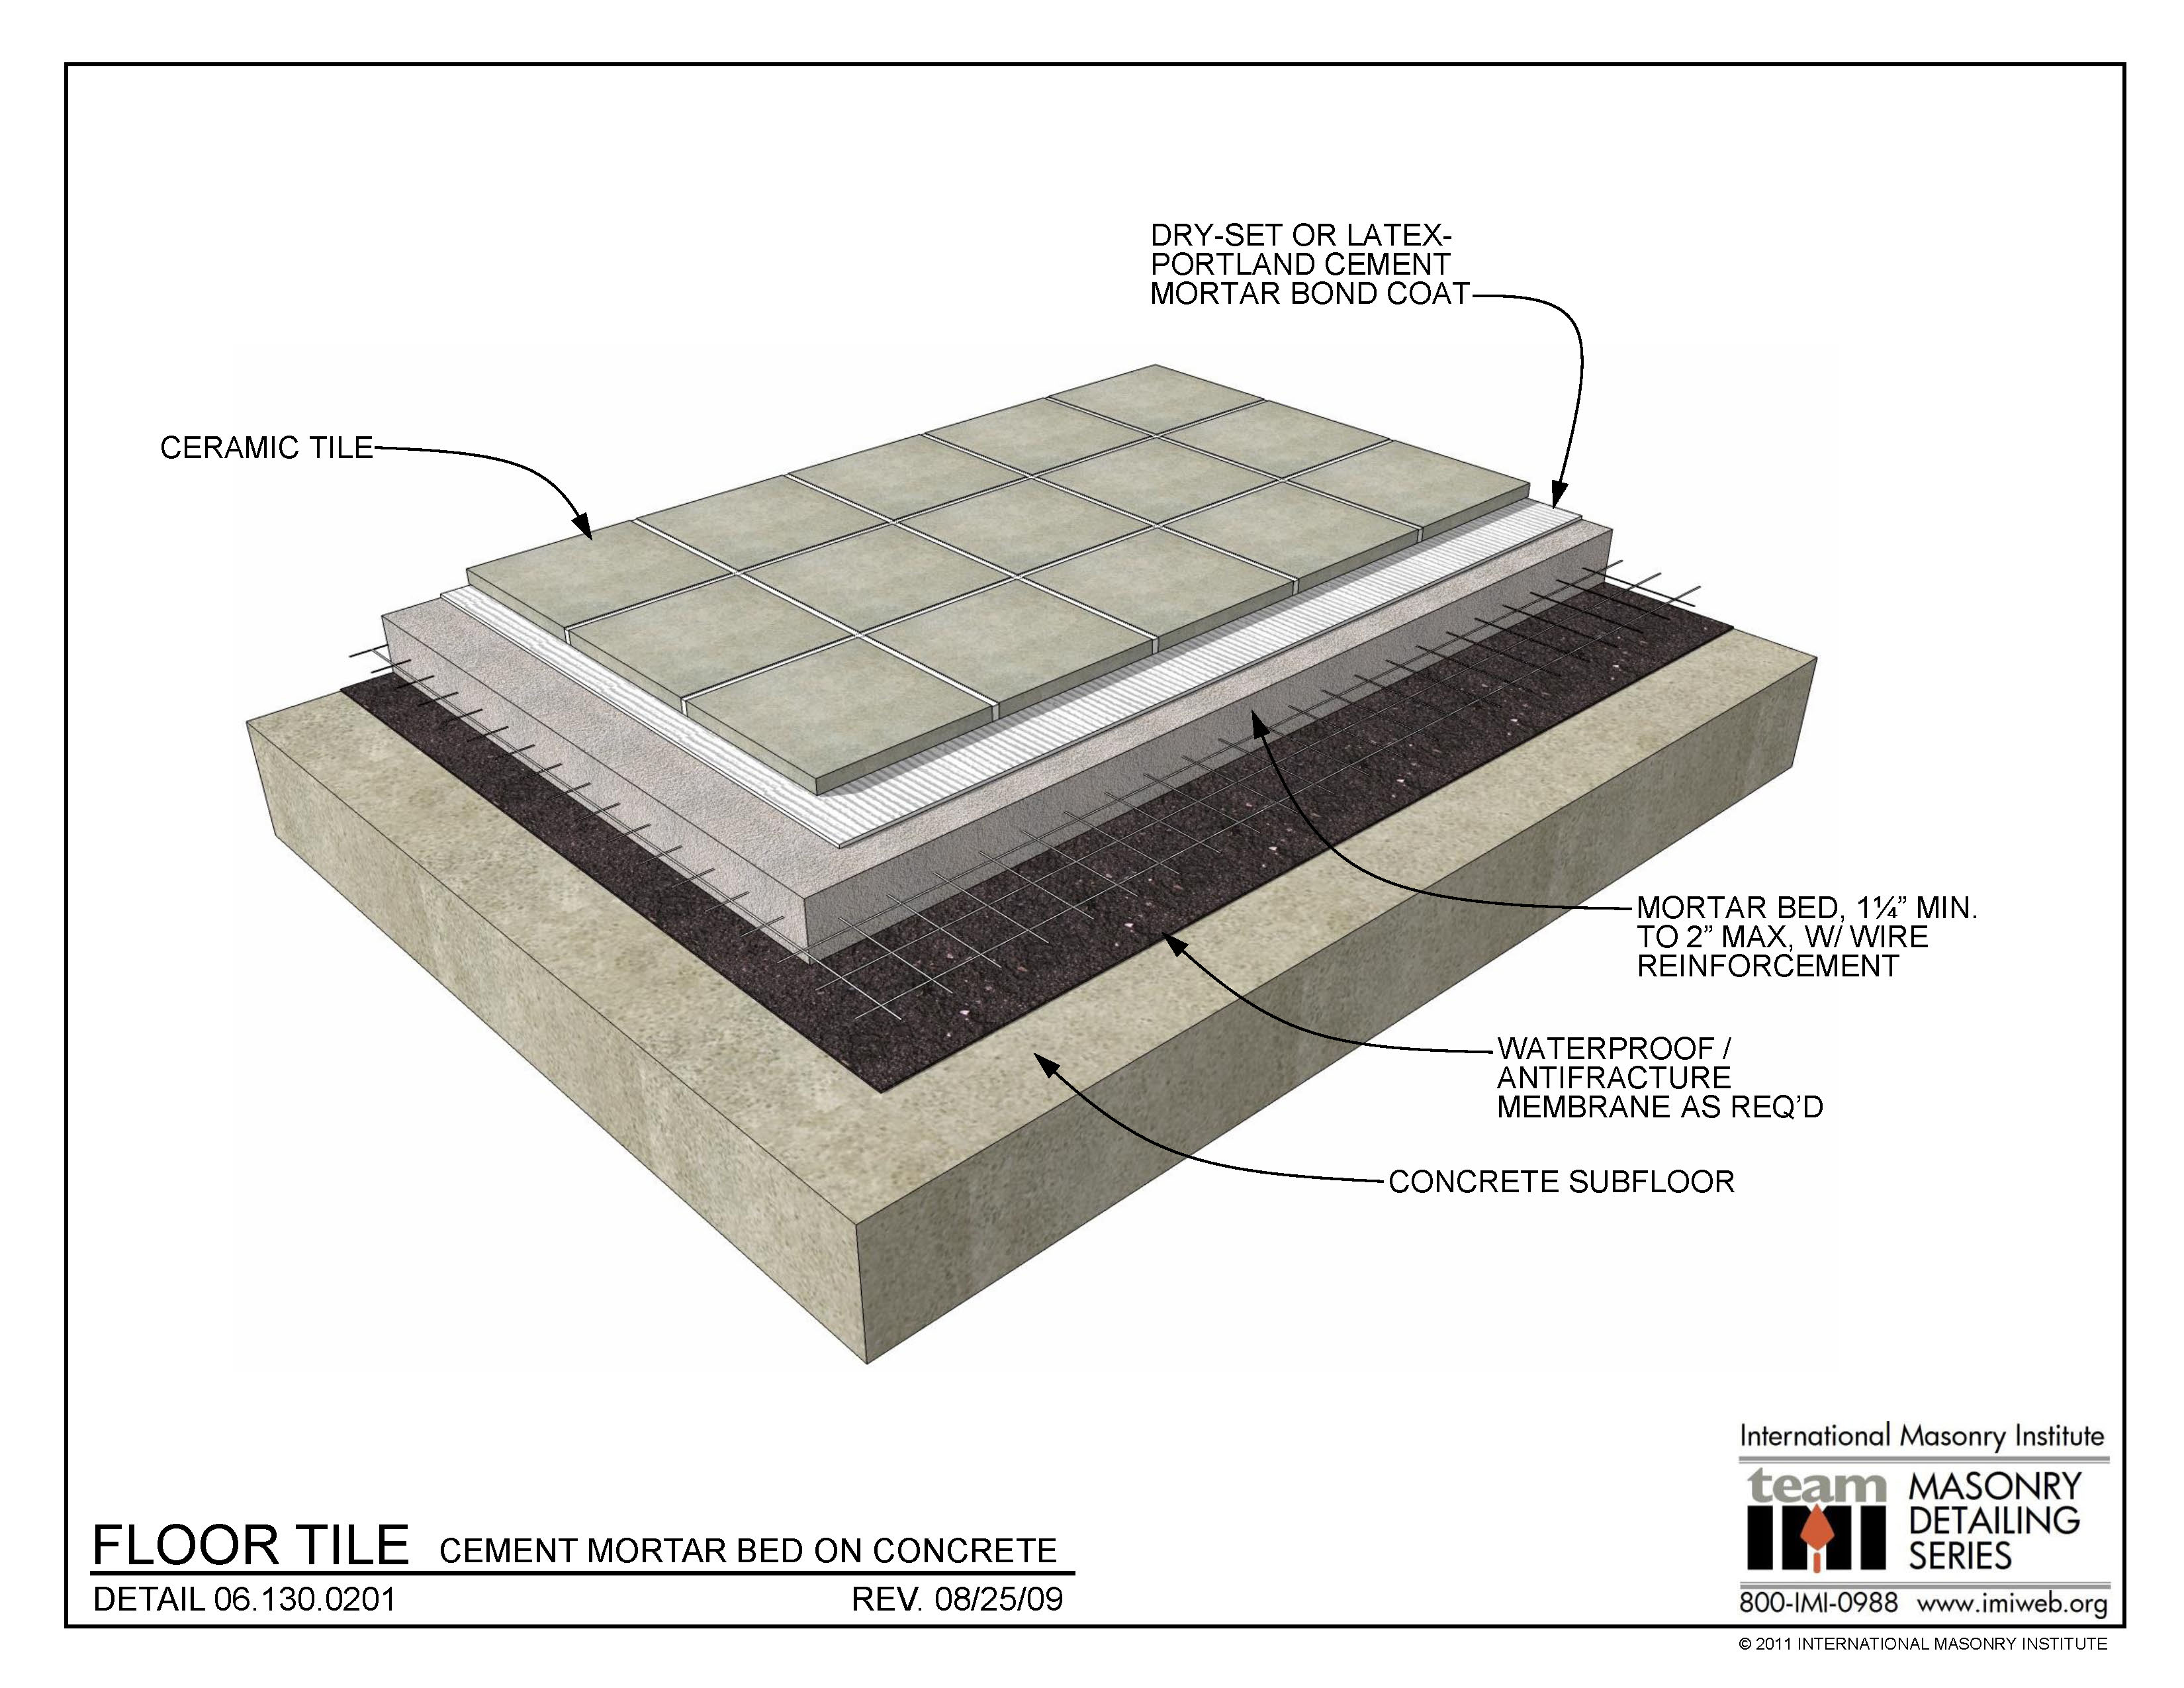 06 130 0201 Floor Tile Cement Mortar Bed On Concrete